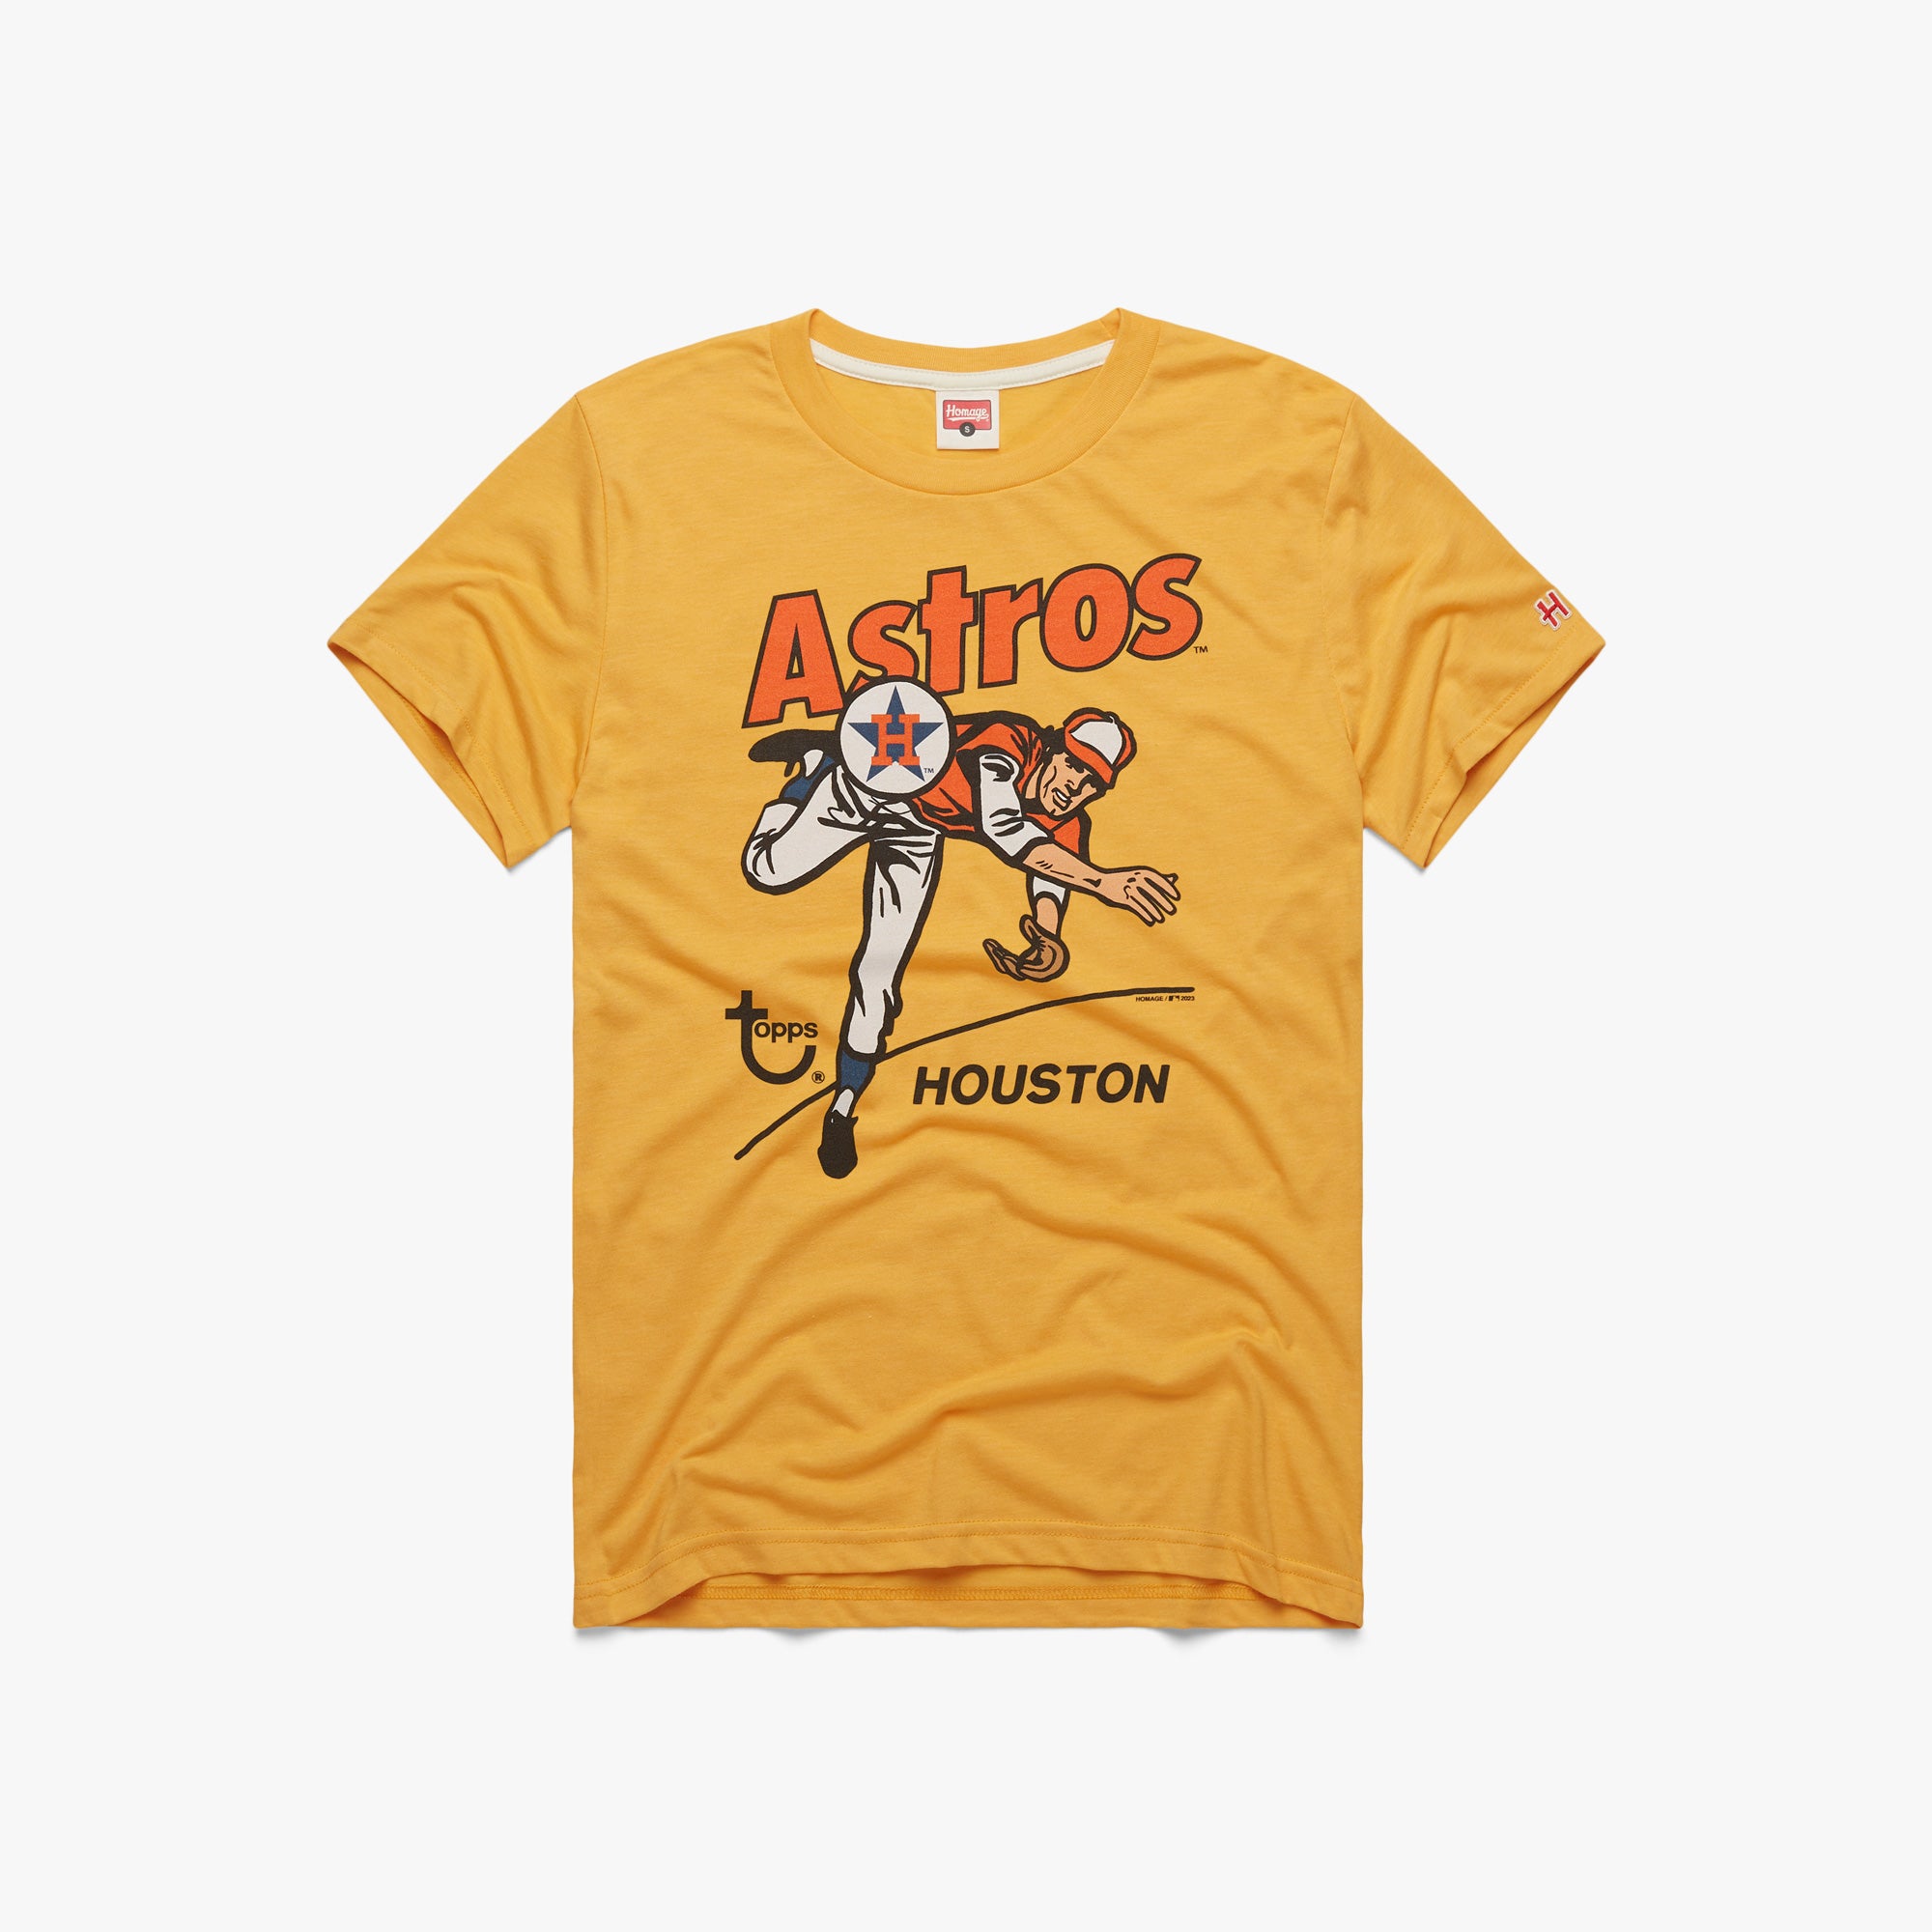 Houston Astros T-Shirts in Houston Astros Team Shop